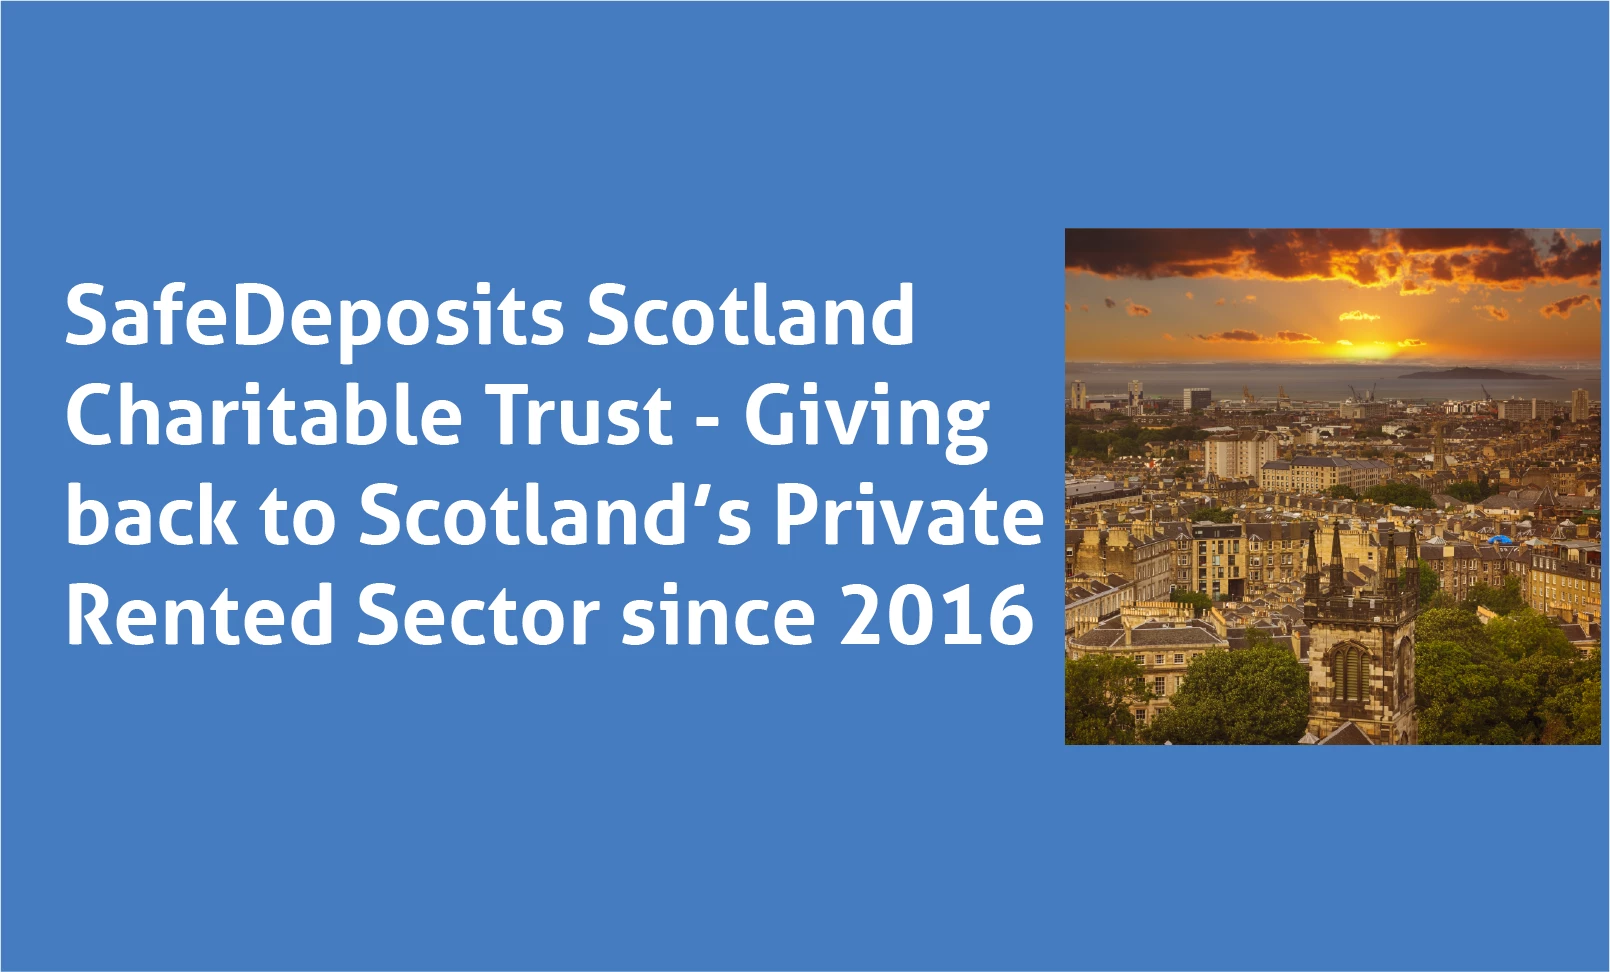 SafeDeposits Scotland Charitable Trust - SafeDeposits Scotland